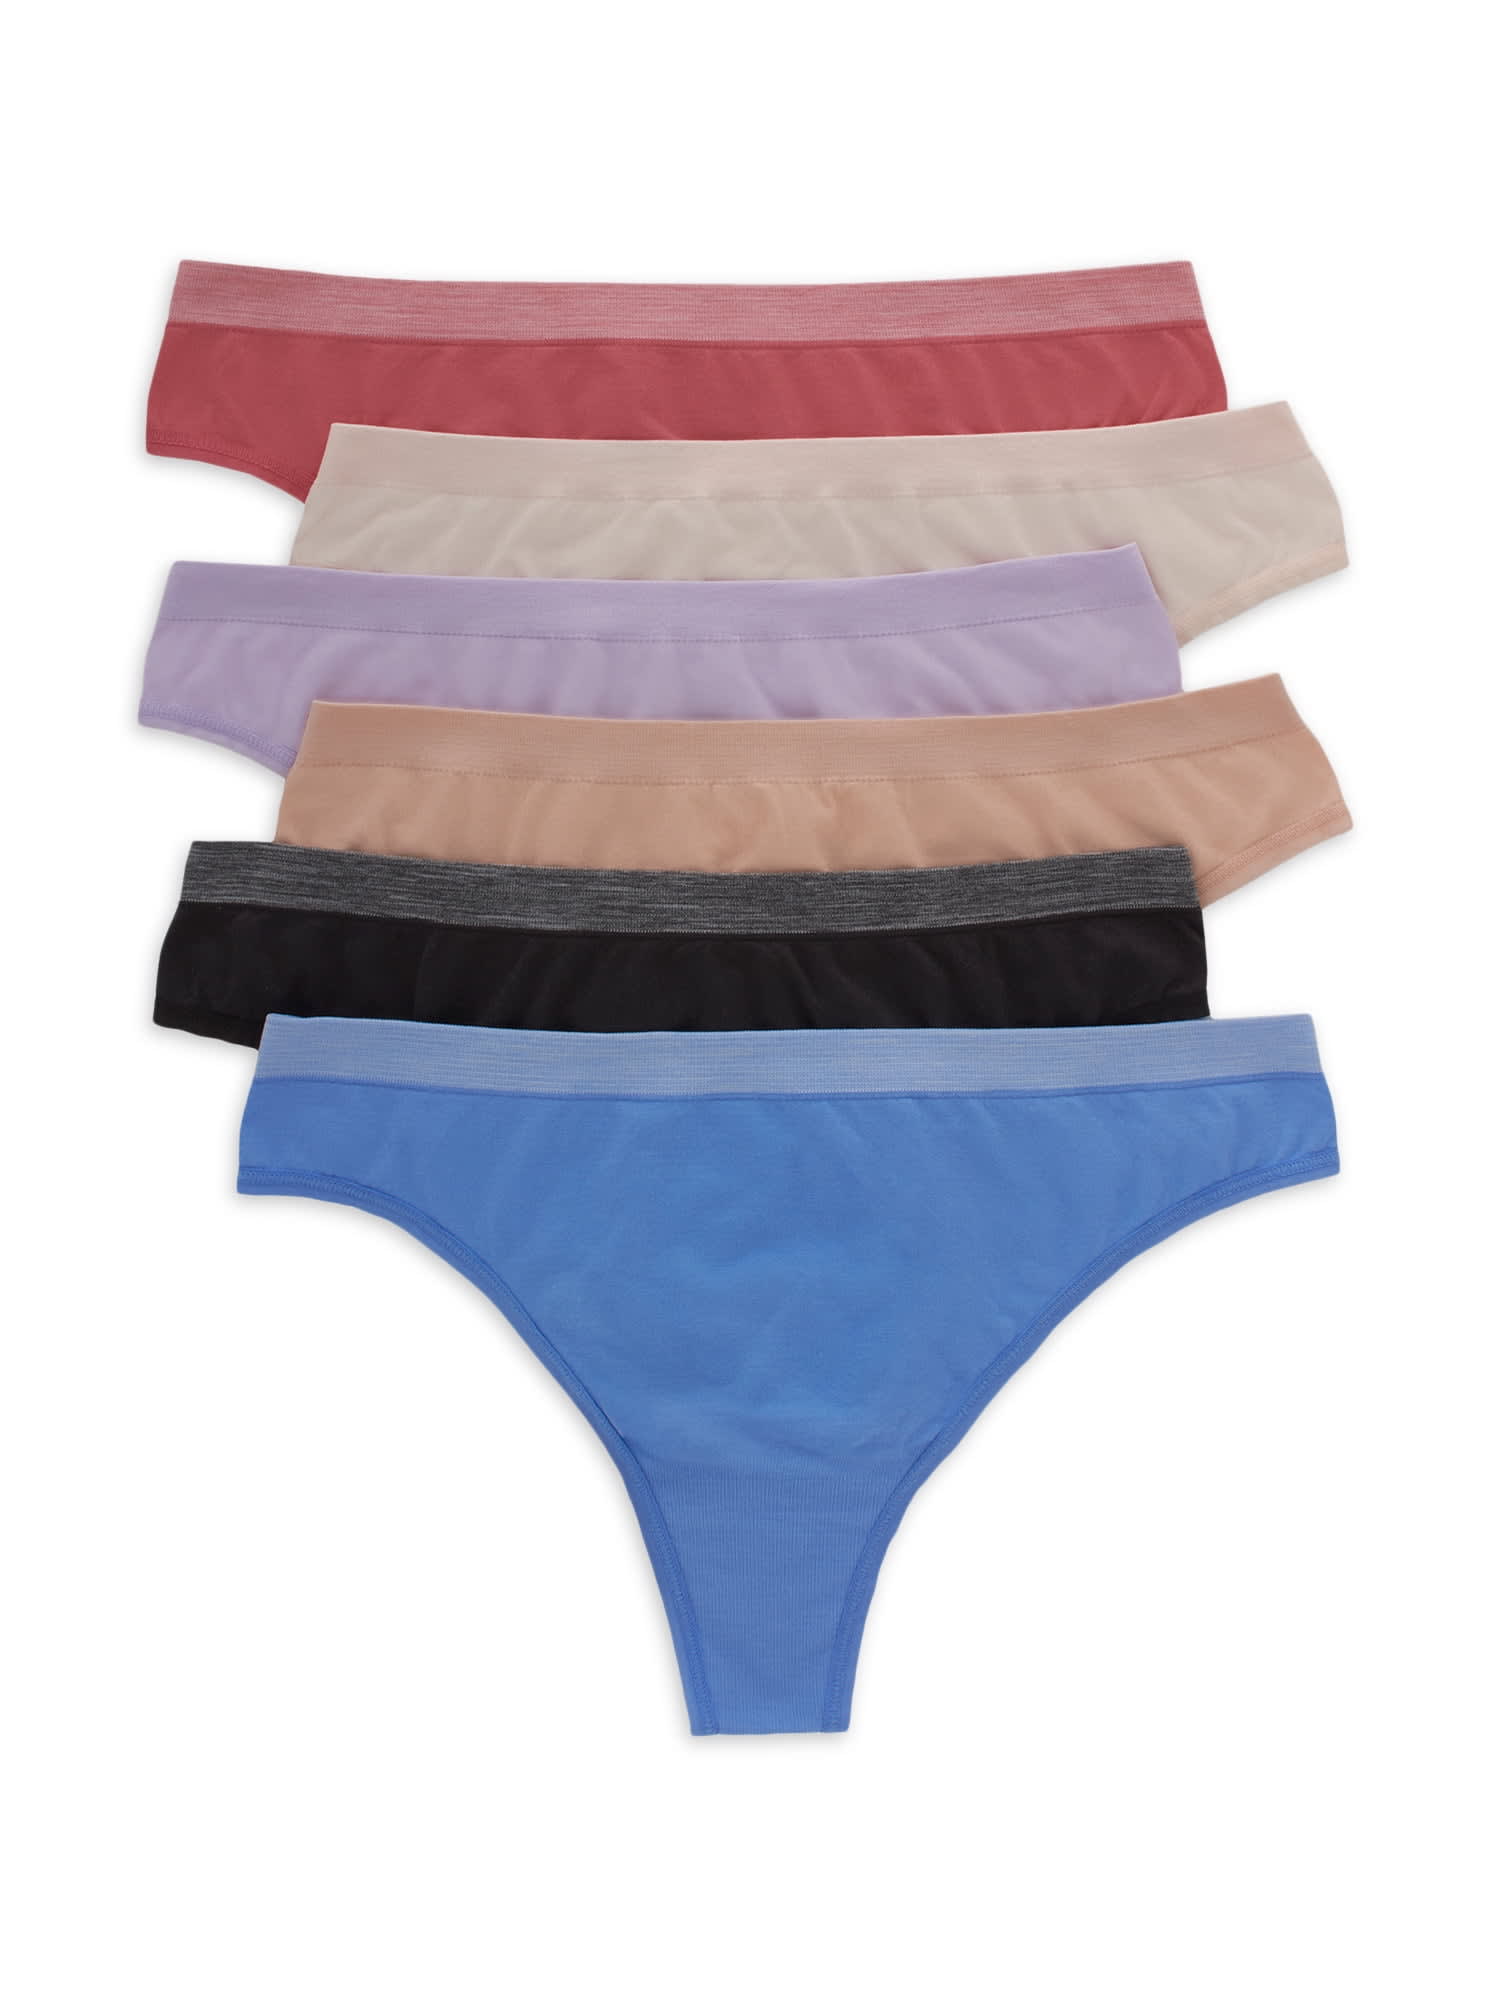 Joyspun Women's Cotton Hipster Panties, 6-Pack, Sizes S to 2XL